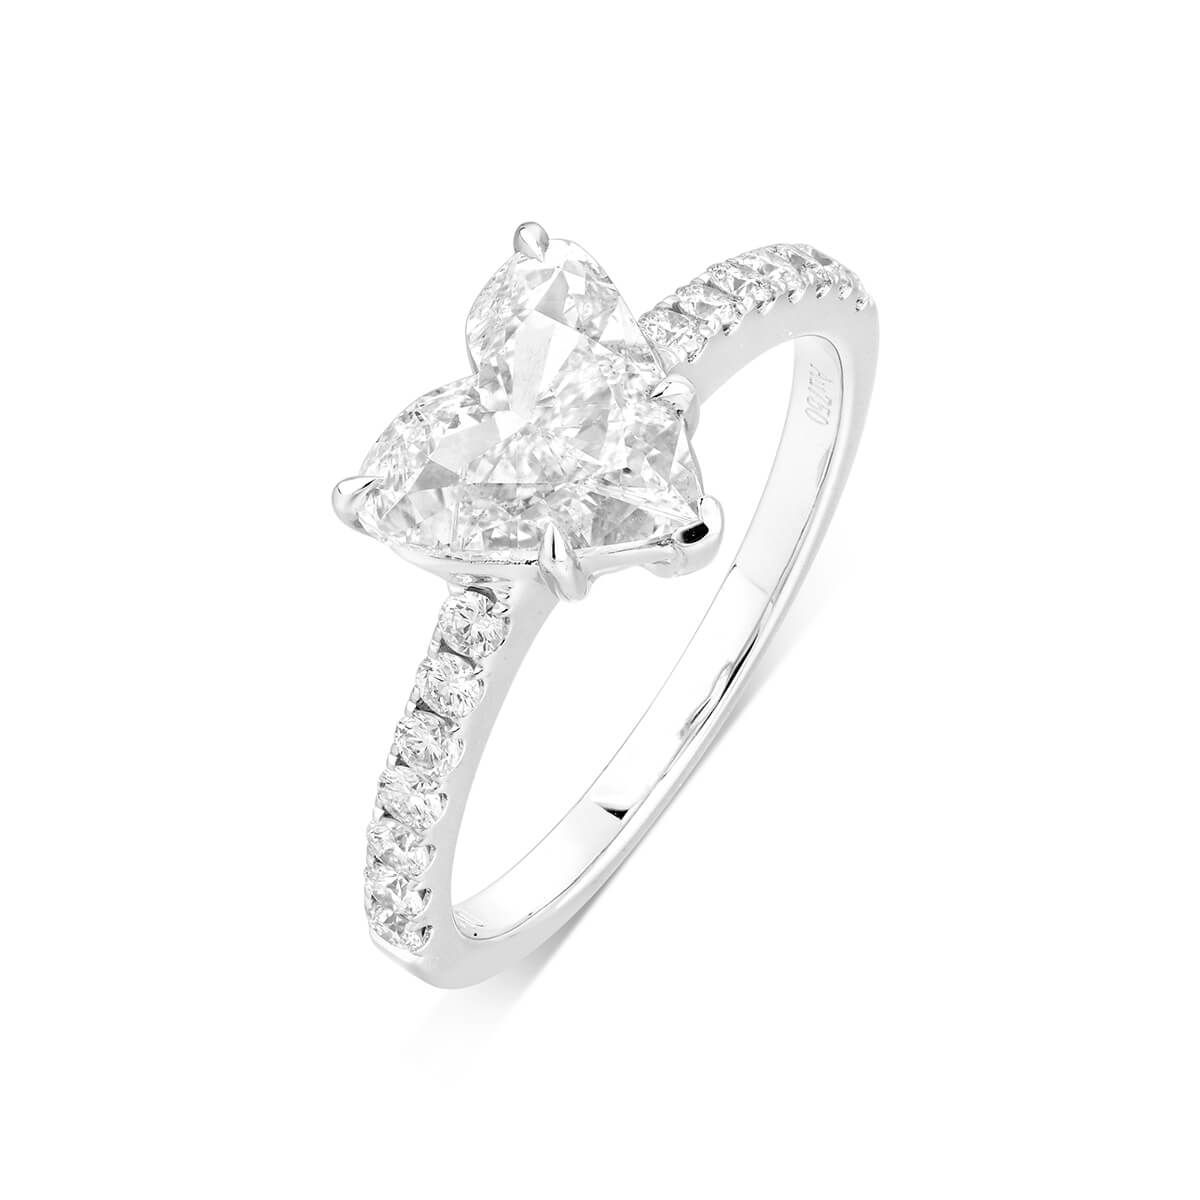 White Diamond Ring, 1.24 Ct. (1.57 Ct. TW), Heart shape, GIA Certified, 2274407974